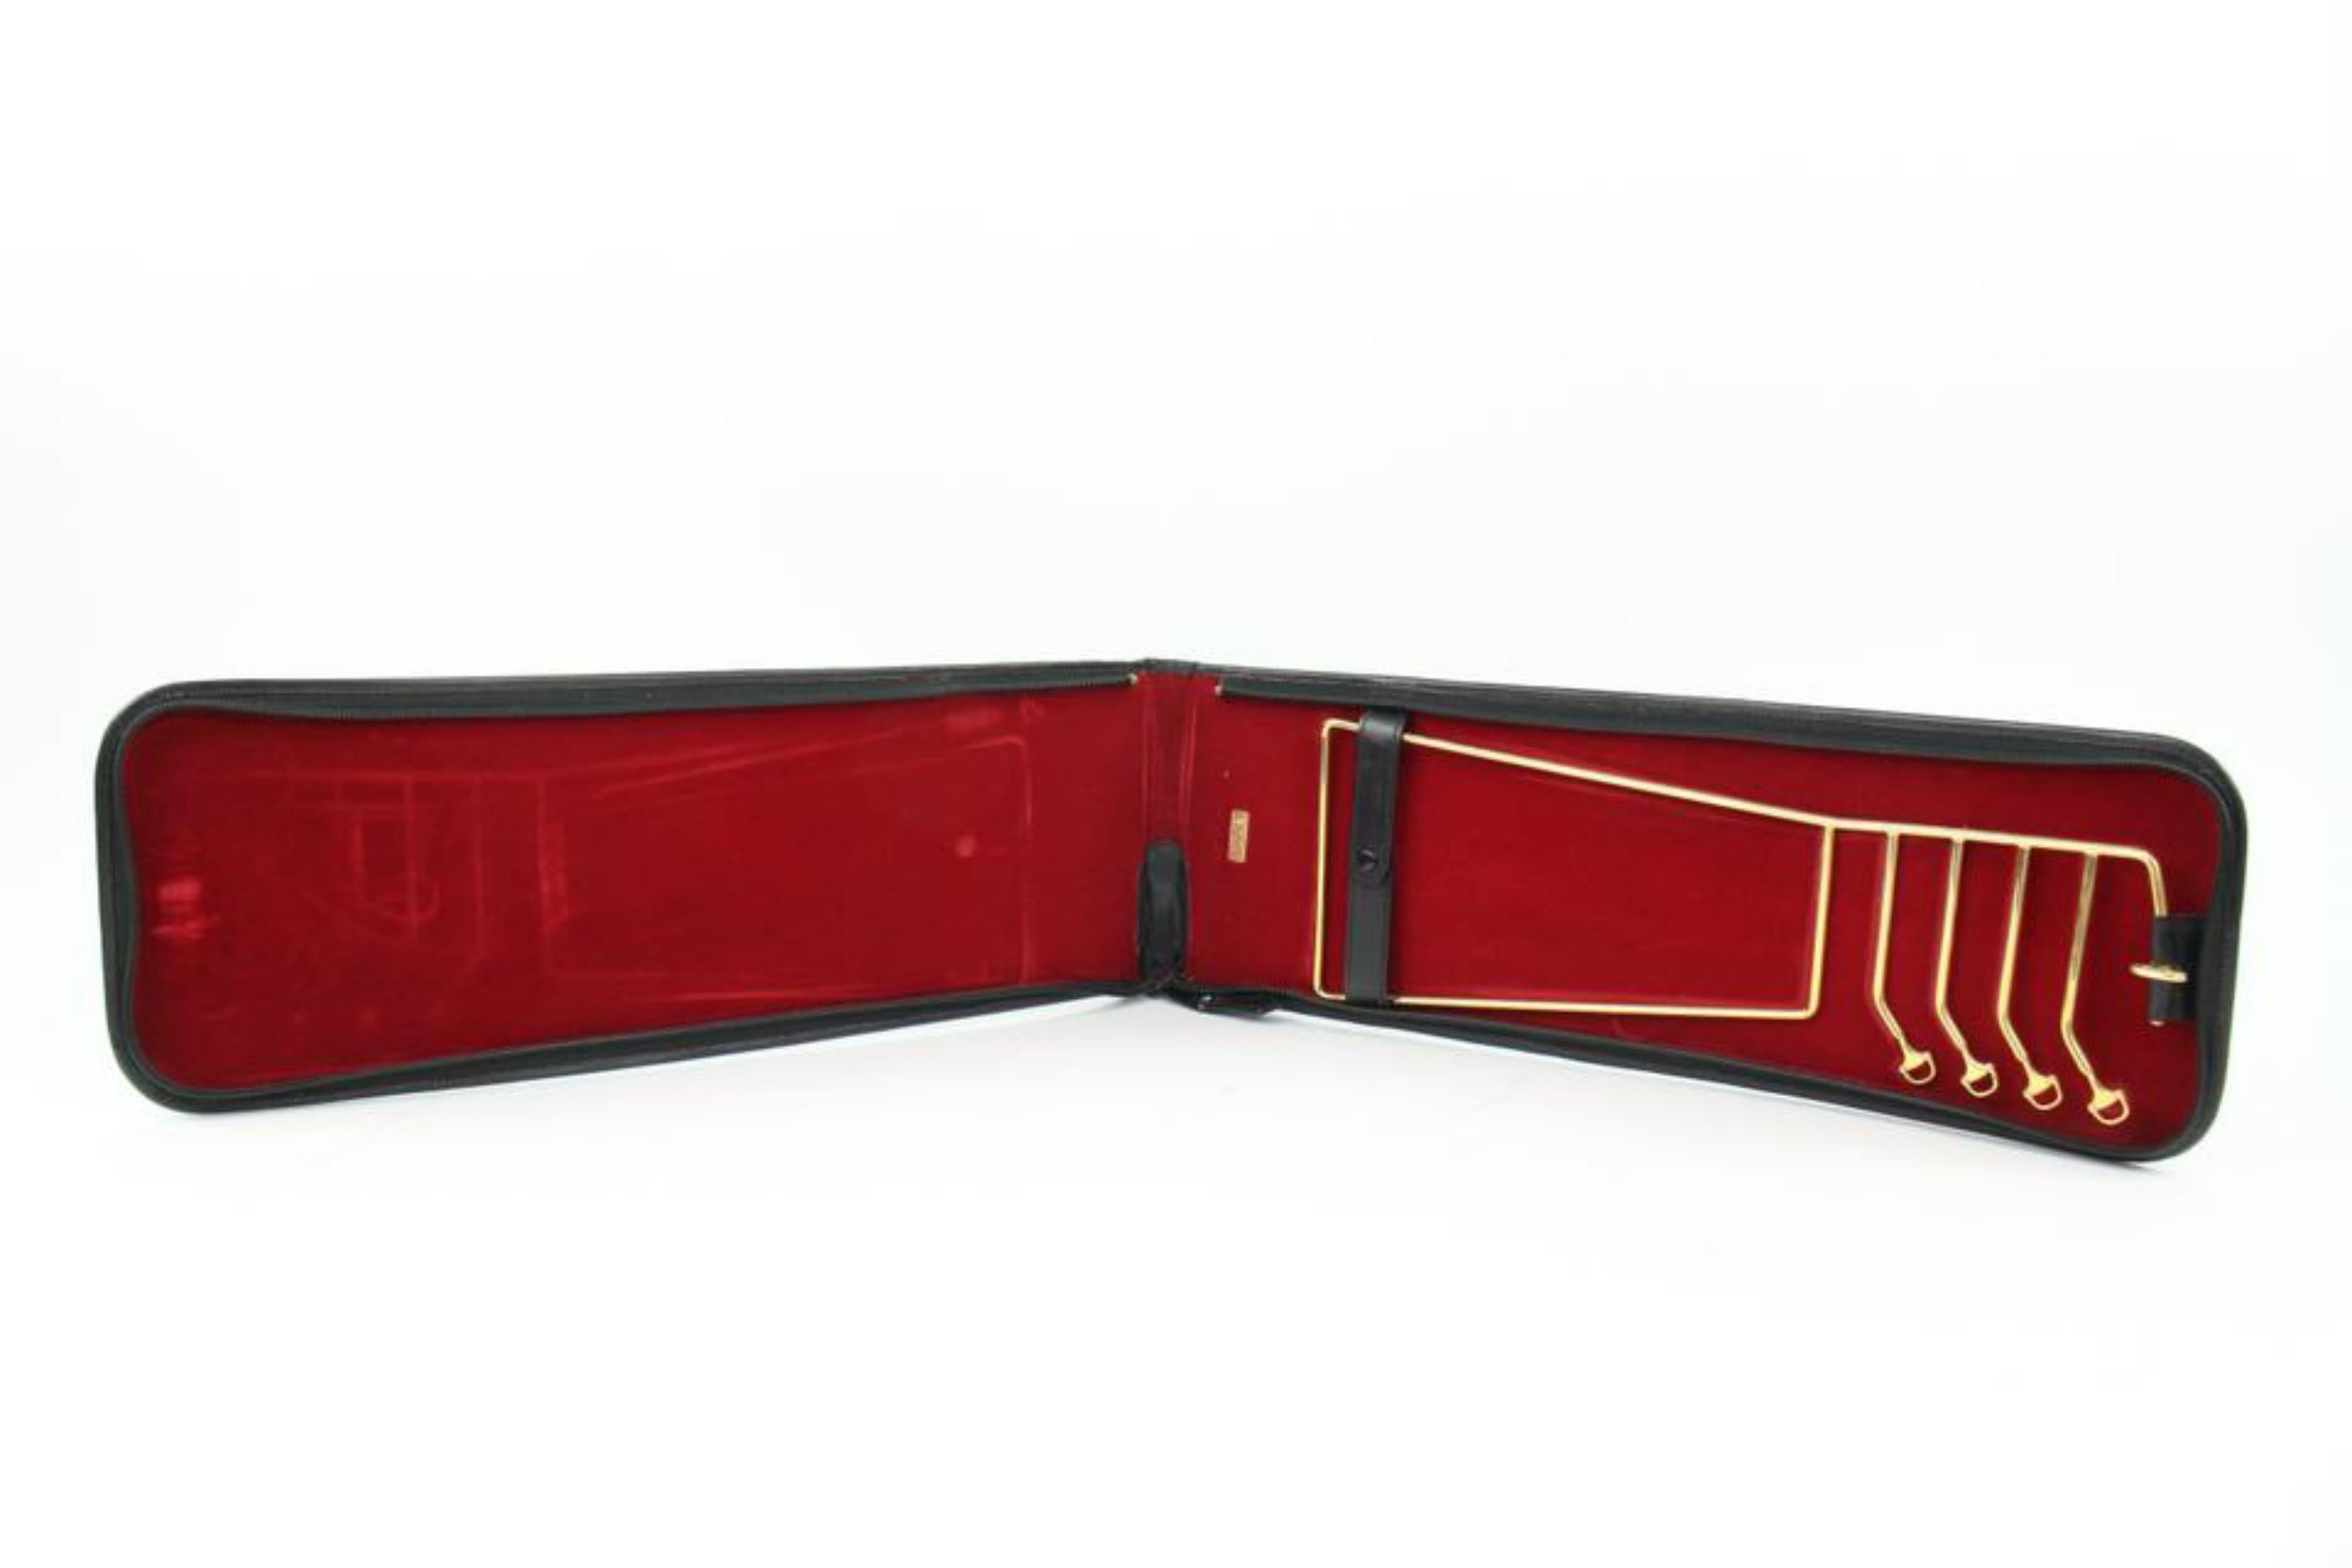 leather tie case